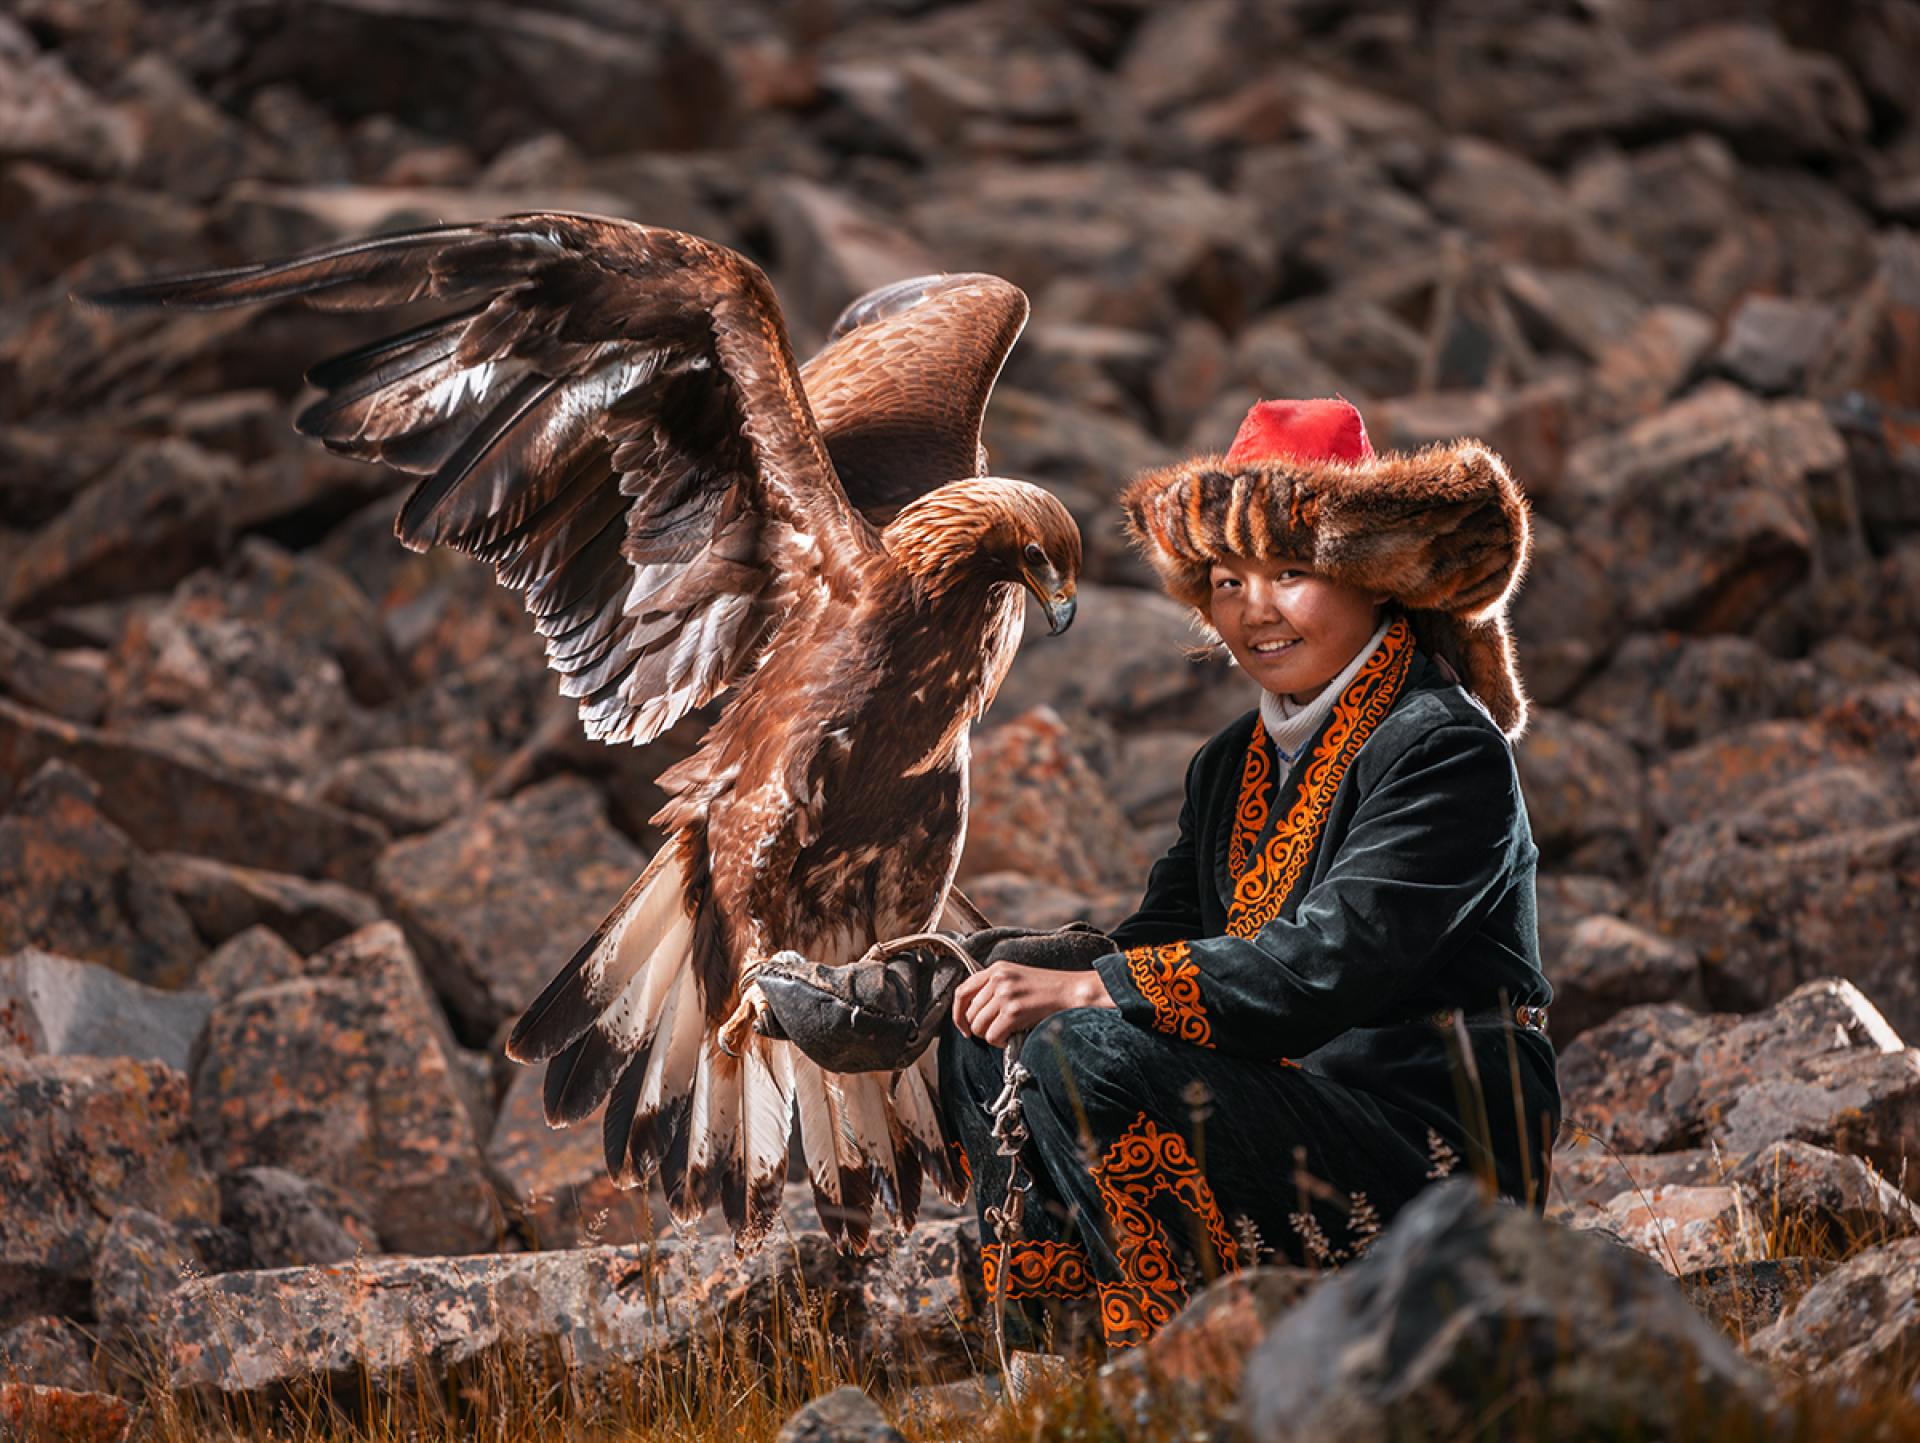 London Photography Awards Winner - Eagle Hunter Lady